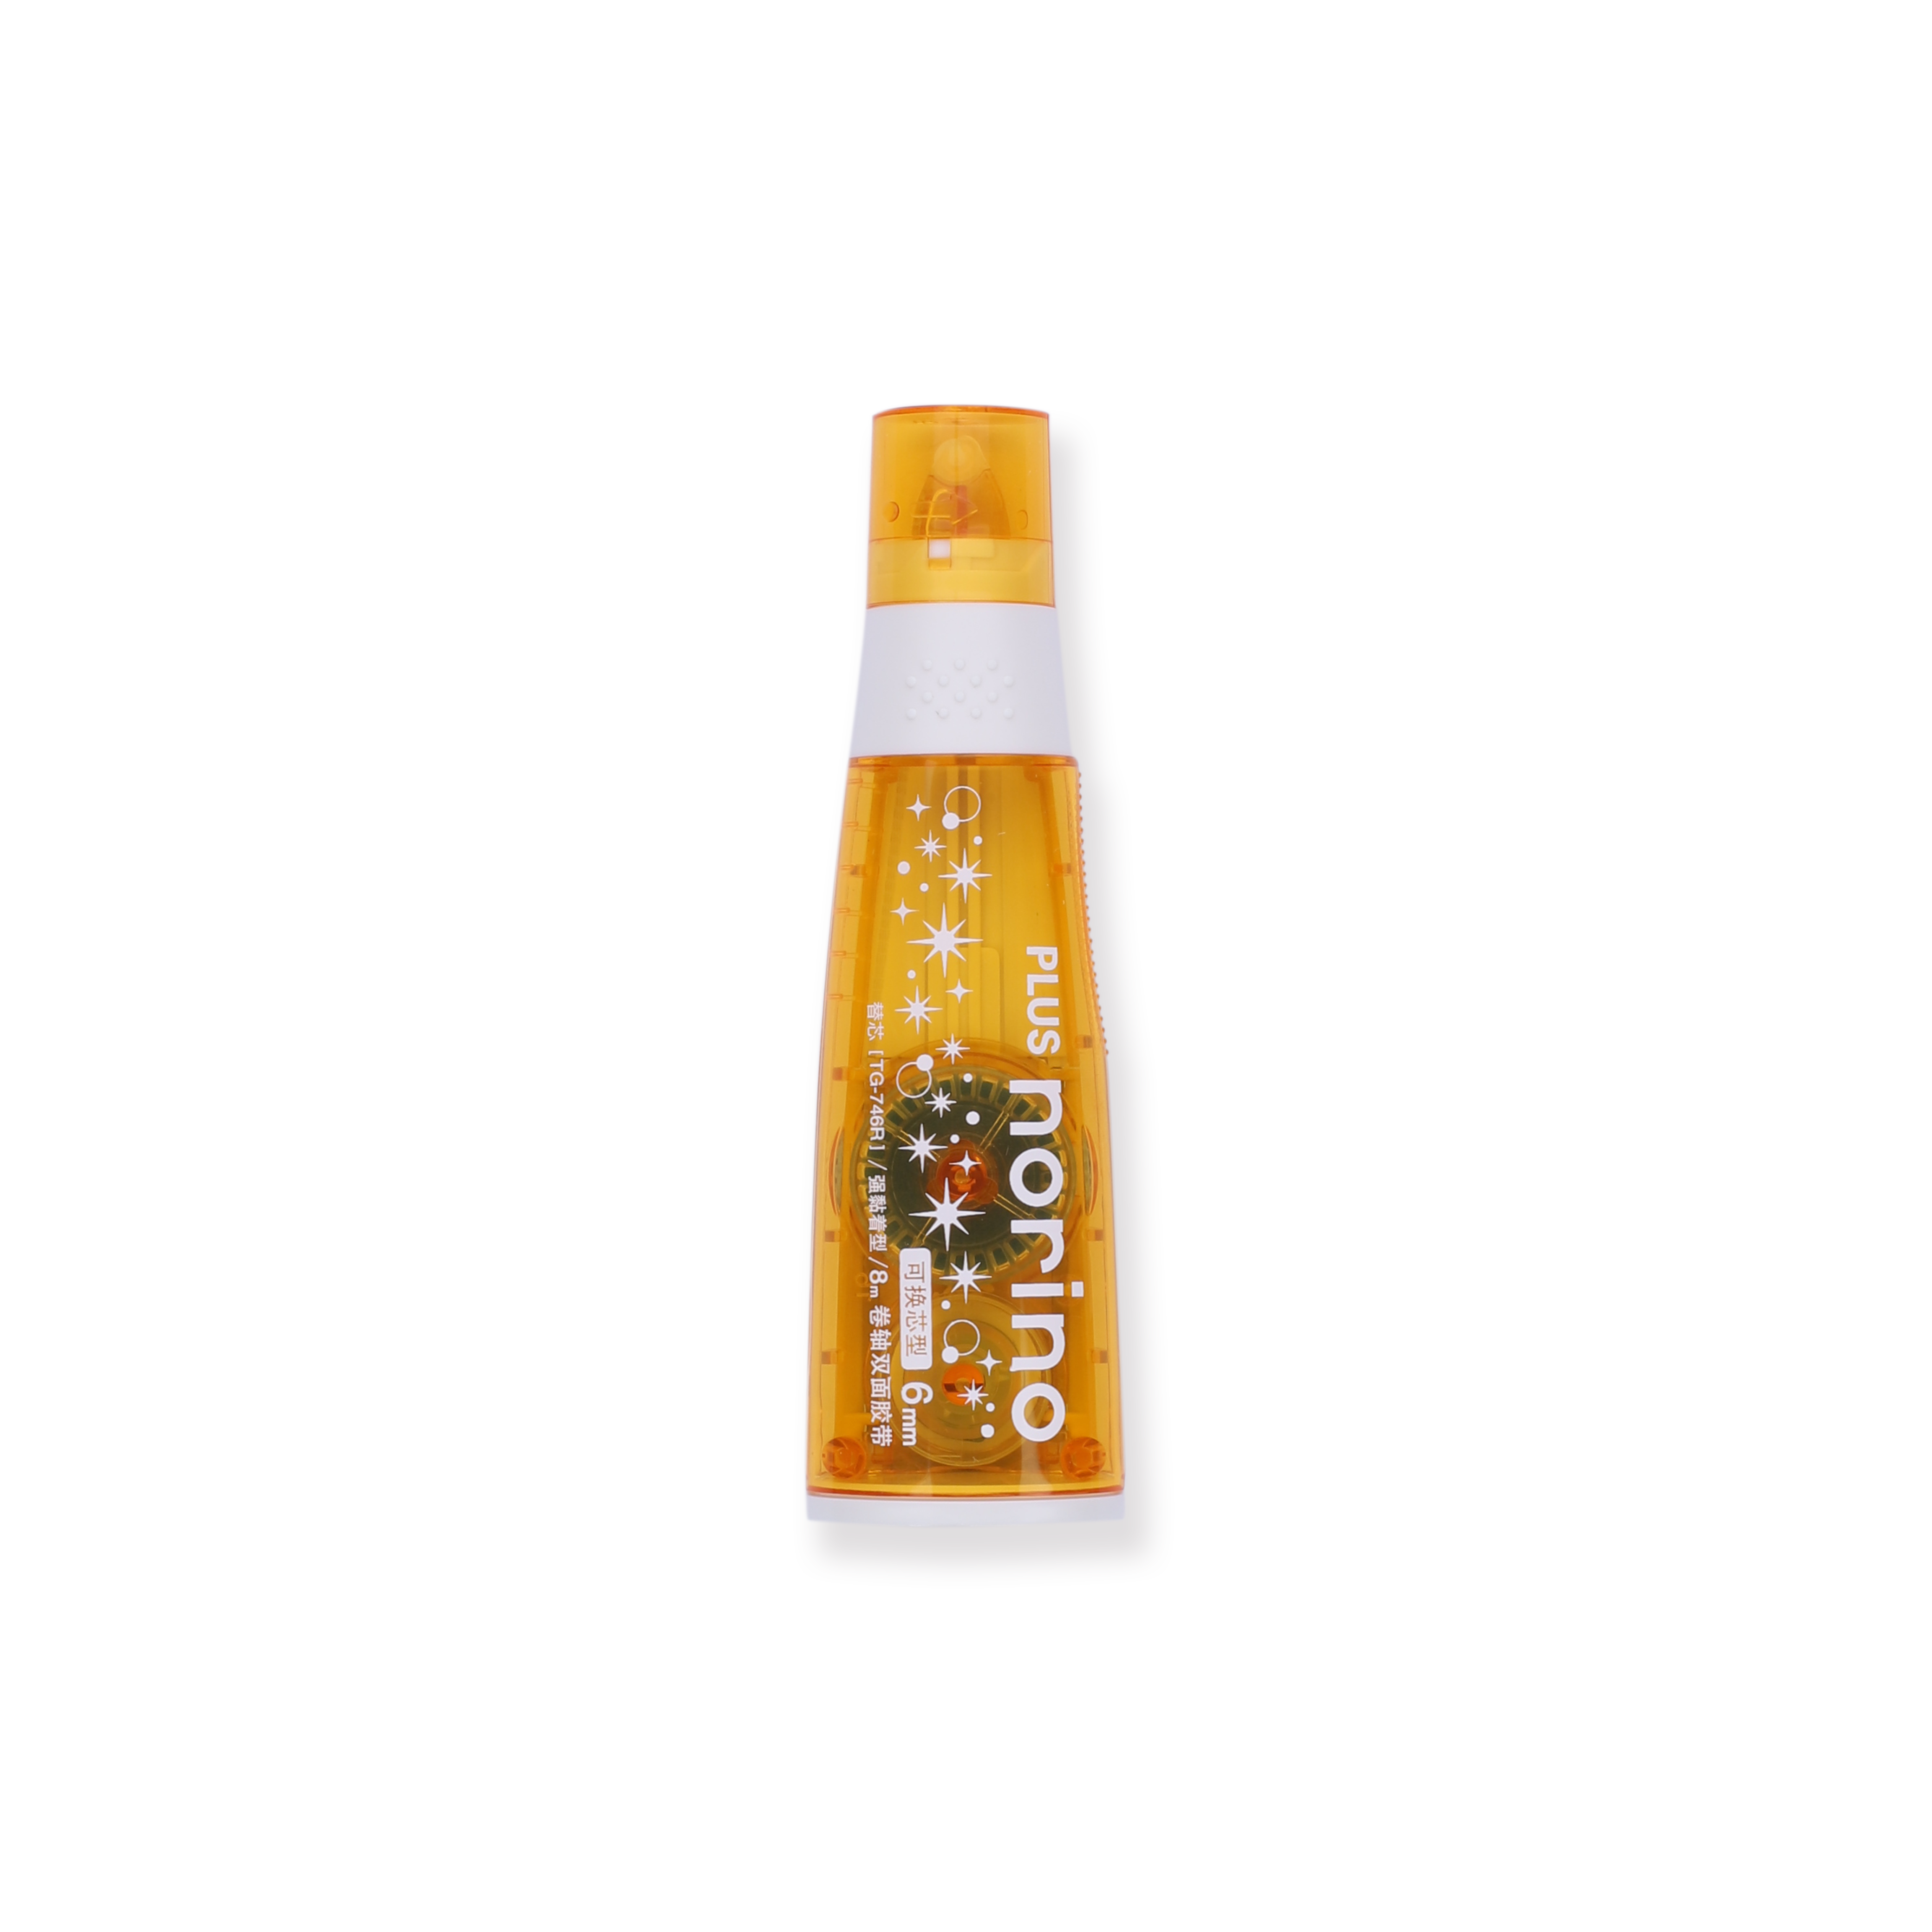 Plus Norino Double-sided Adhesive Glue Tape - 6 mm x 8 m - Orange